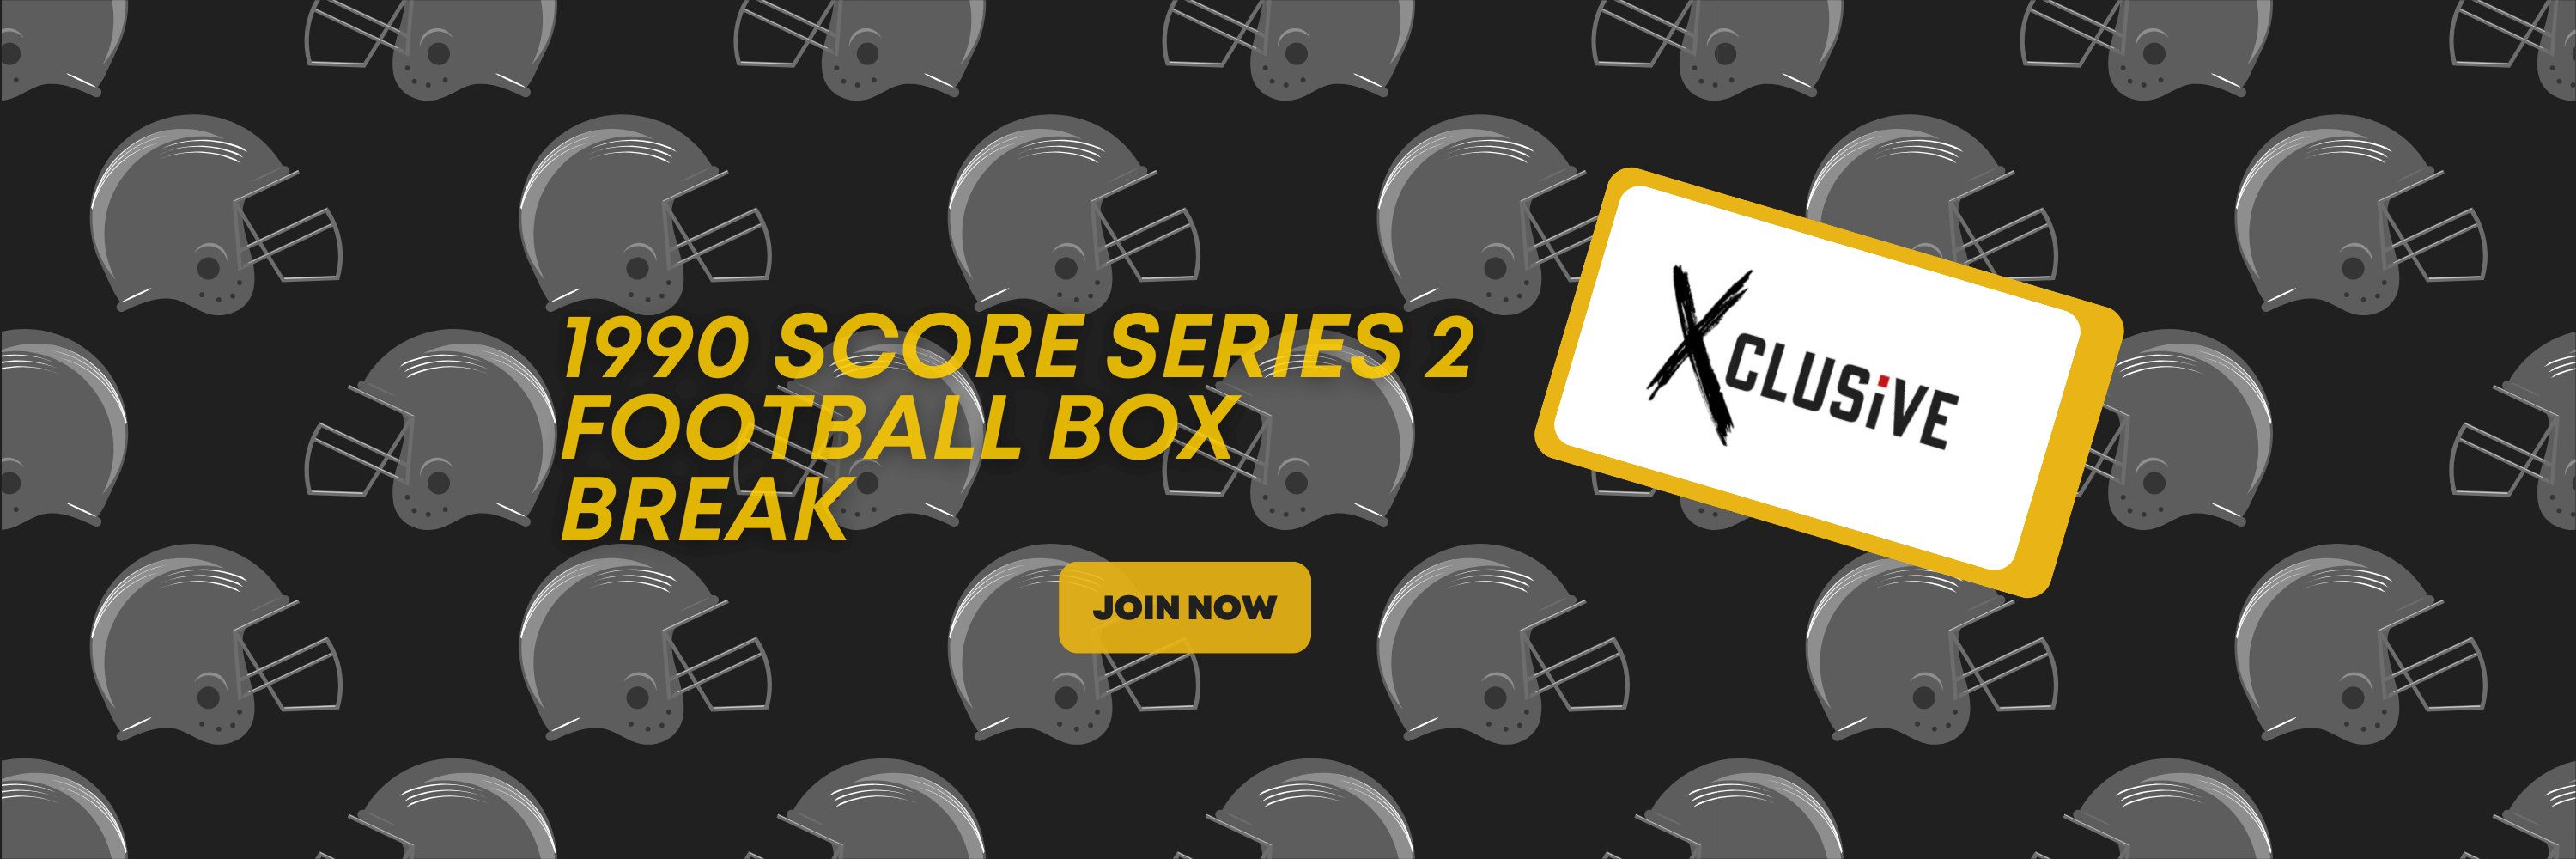 1990 Score Series 2 Football Box Break – See What’s Inside!